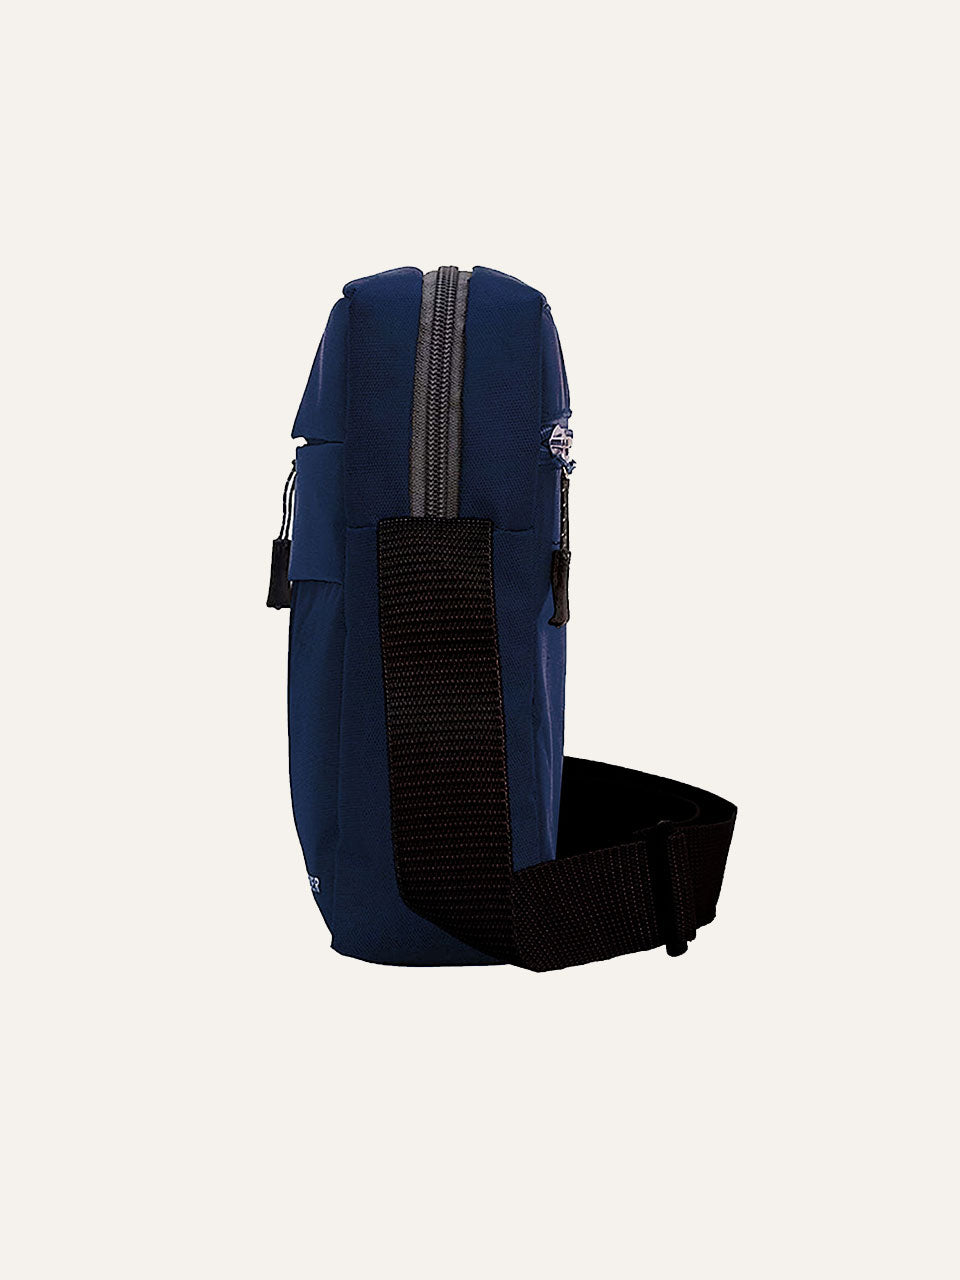 Men's Innerwear set (Pack of 8) with Free Sling Bag